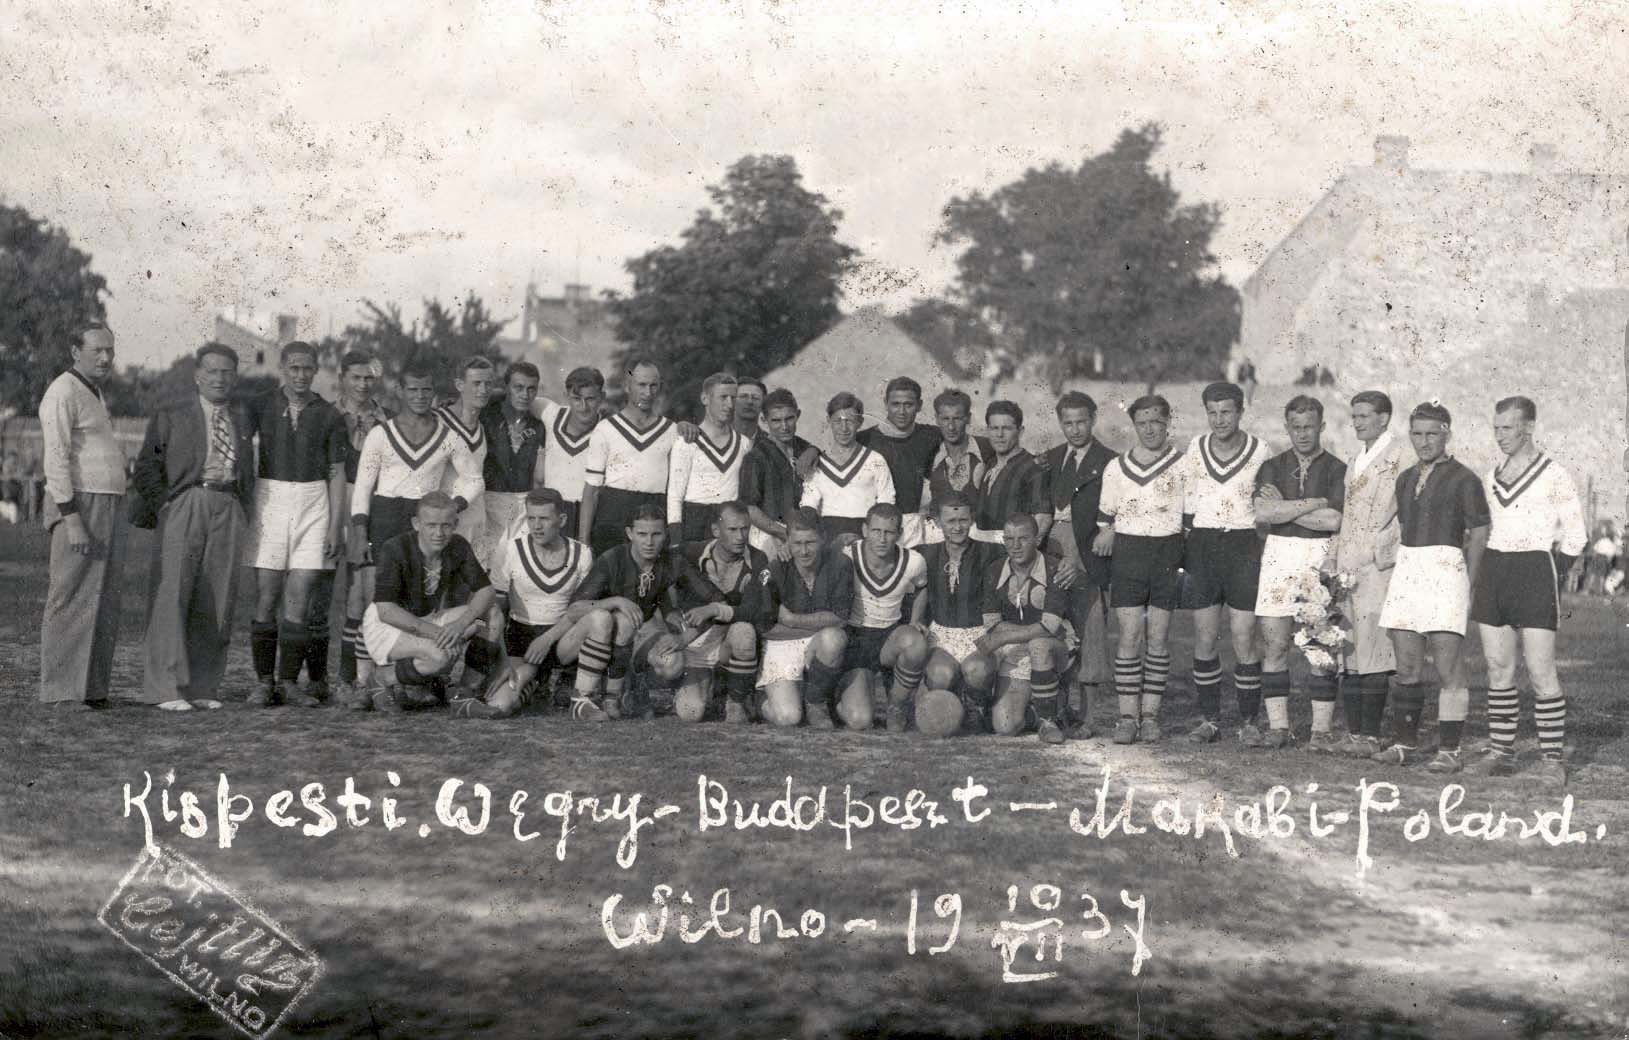 Vilna, Poland, "Maccabi" group from Vilna and Kispesti group from Budapest, 10/07/1937